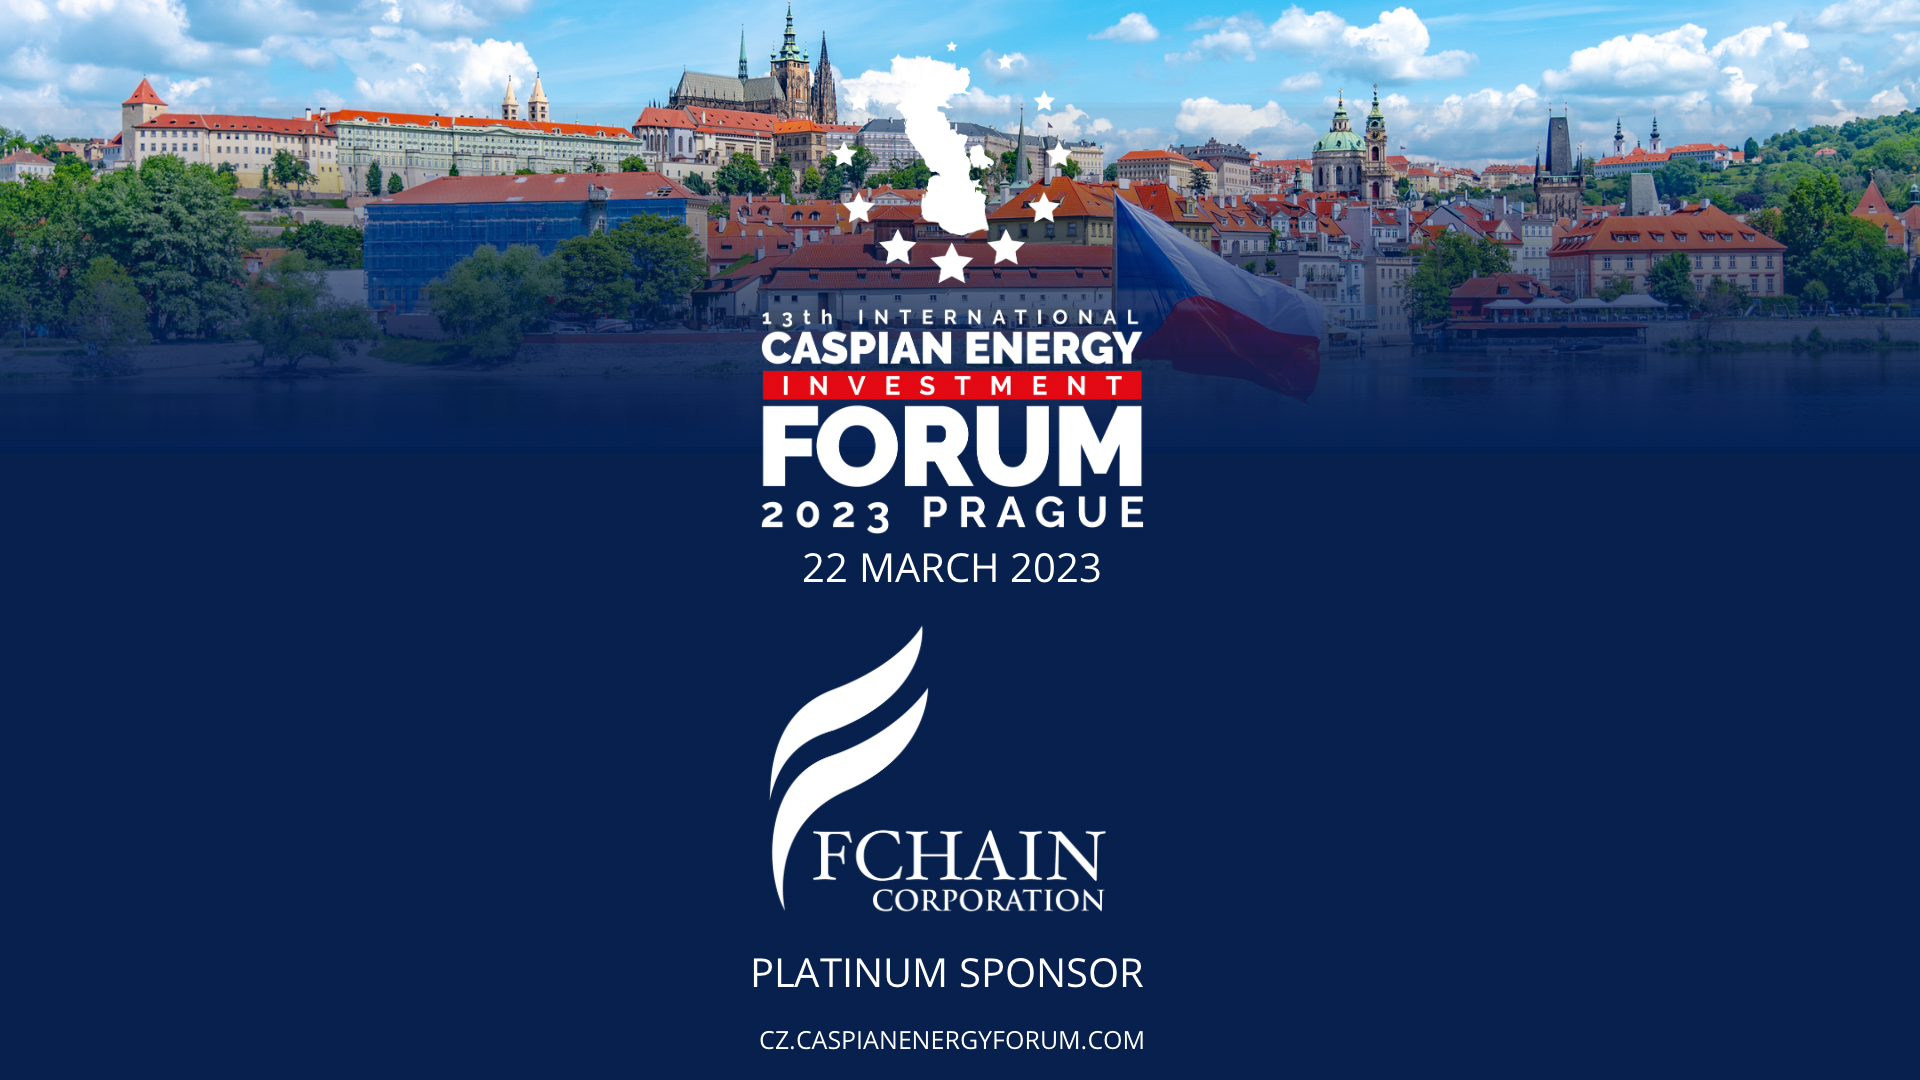 Platinum Sponsor of the Caspian Energy Investment Forum Prague 2023